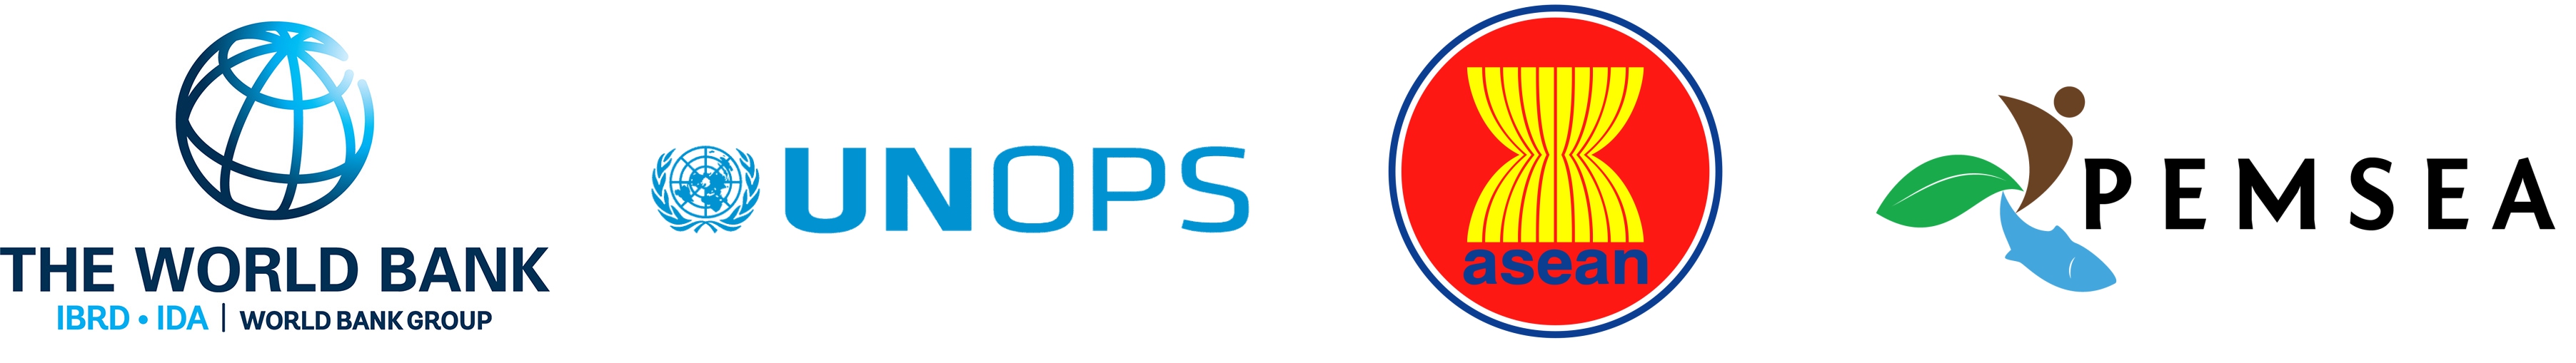 SEA-MaP logoset